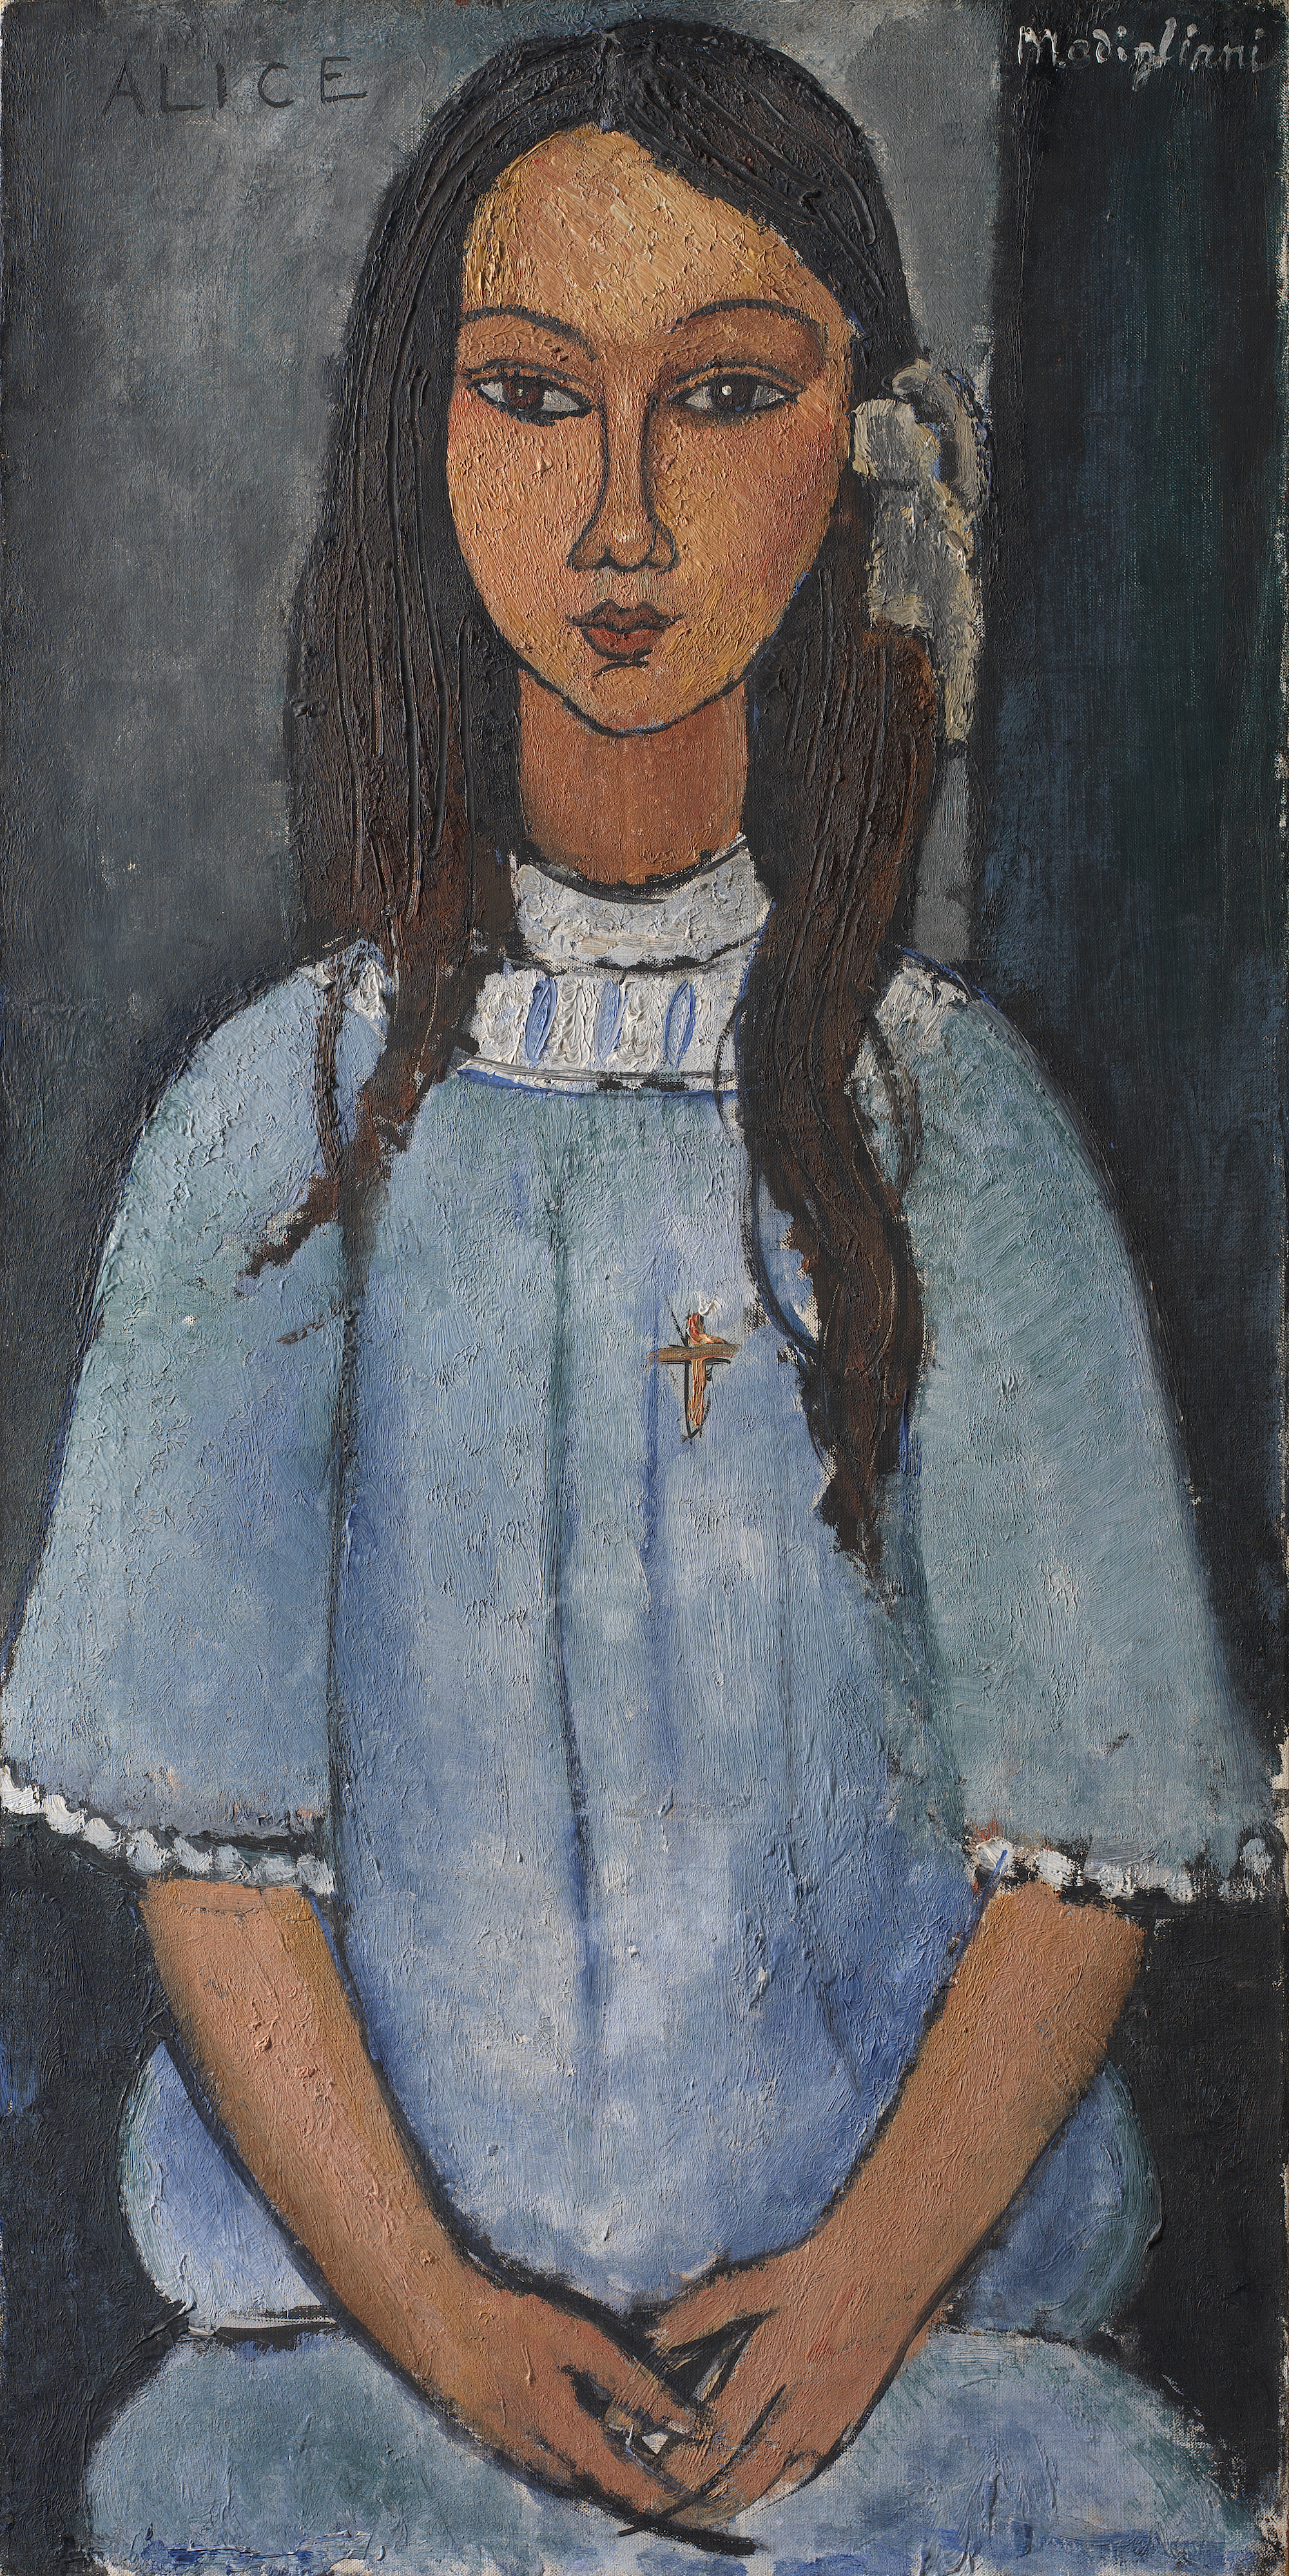 Alice by Amedeo Modigliani - 1918 - - 